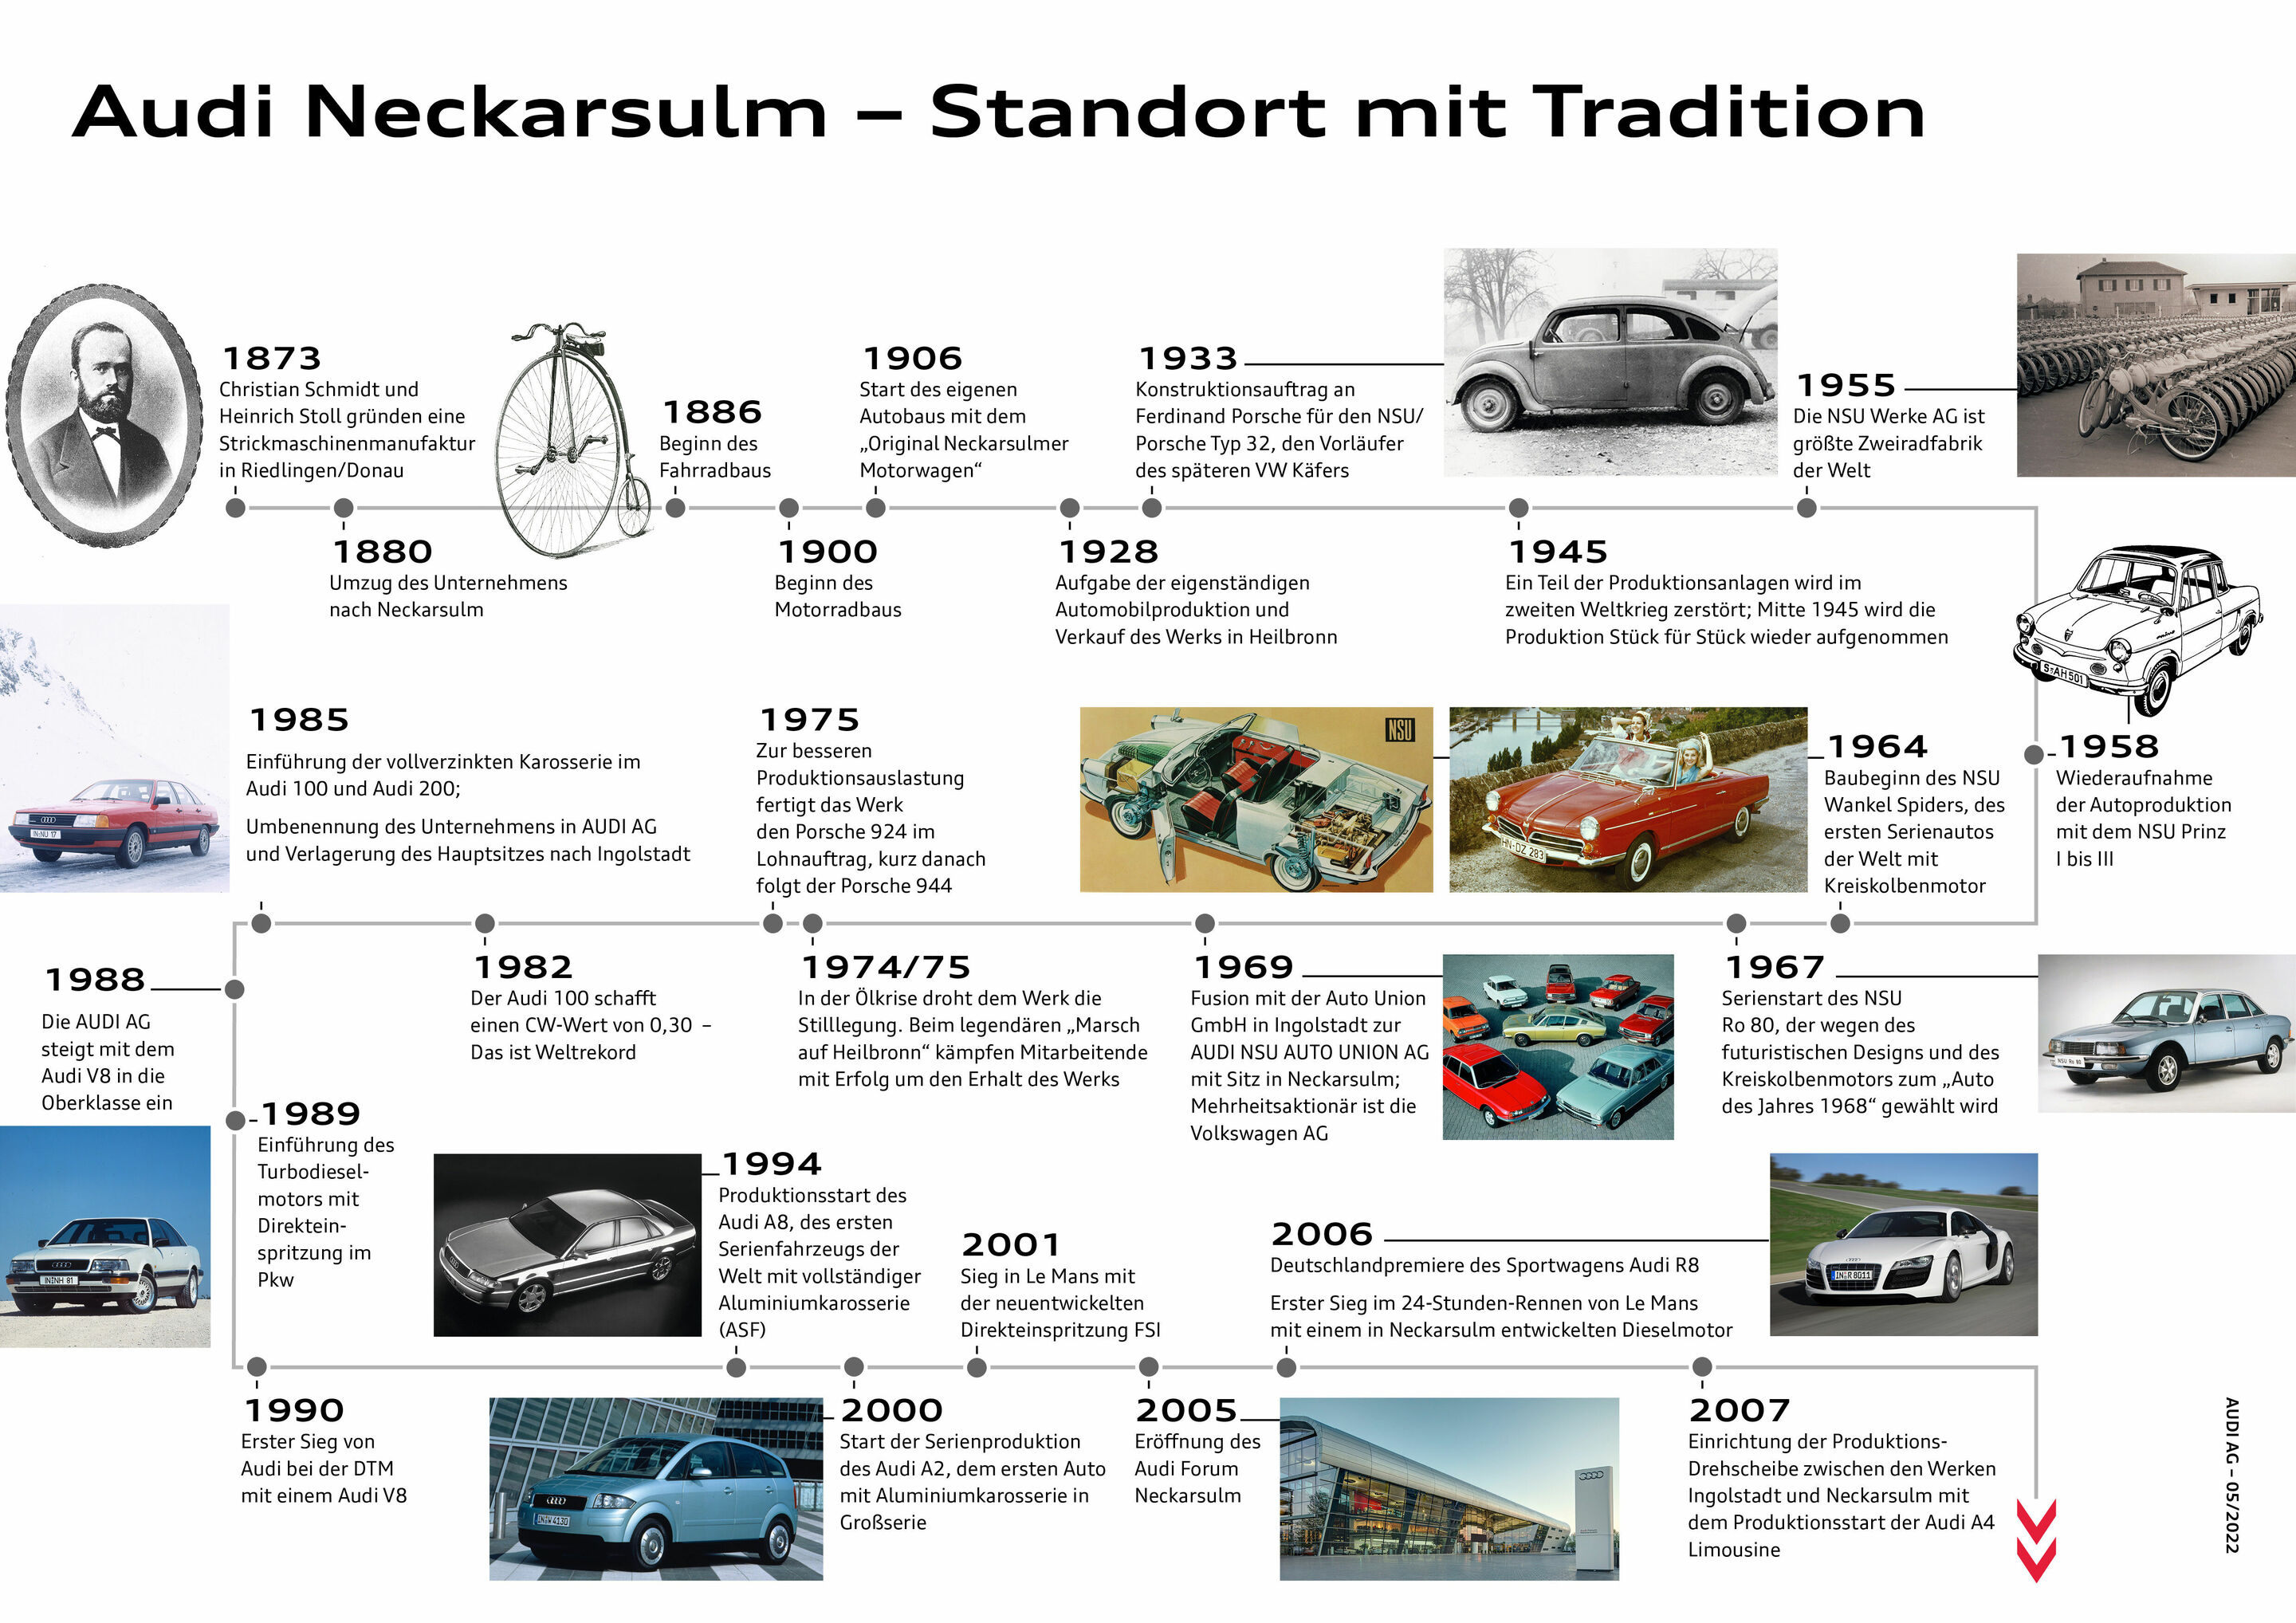 150-jähriges Jubiläum NSU und Audi-Standort Neckarsulm